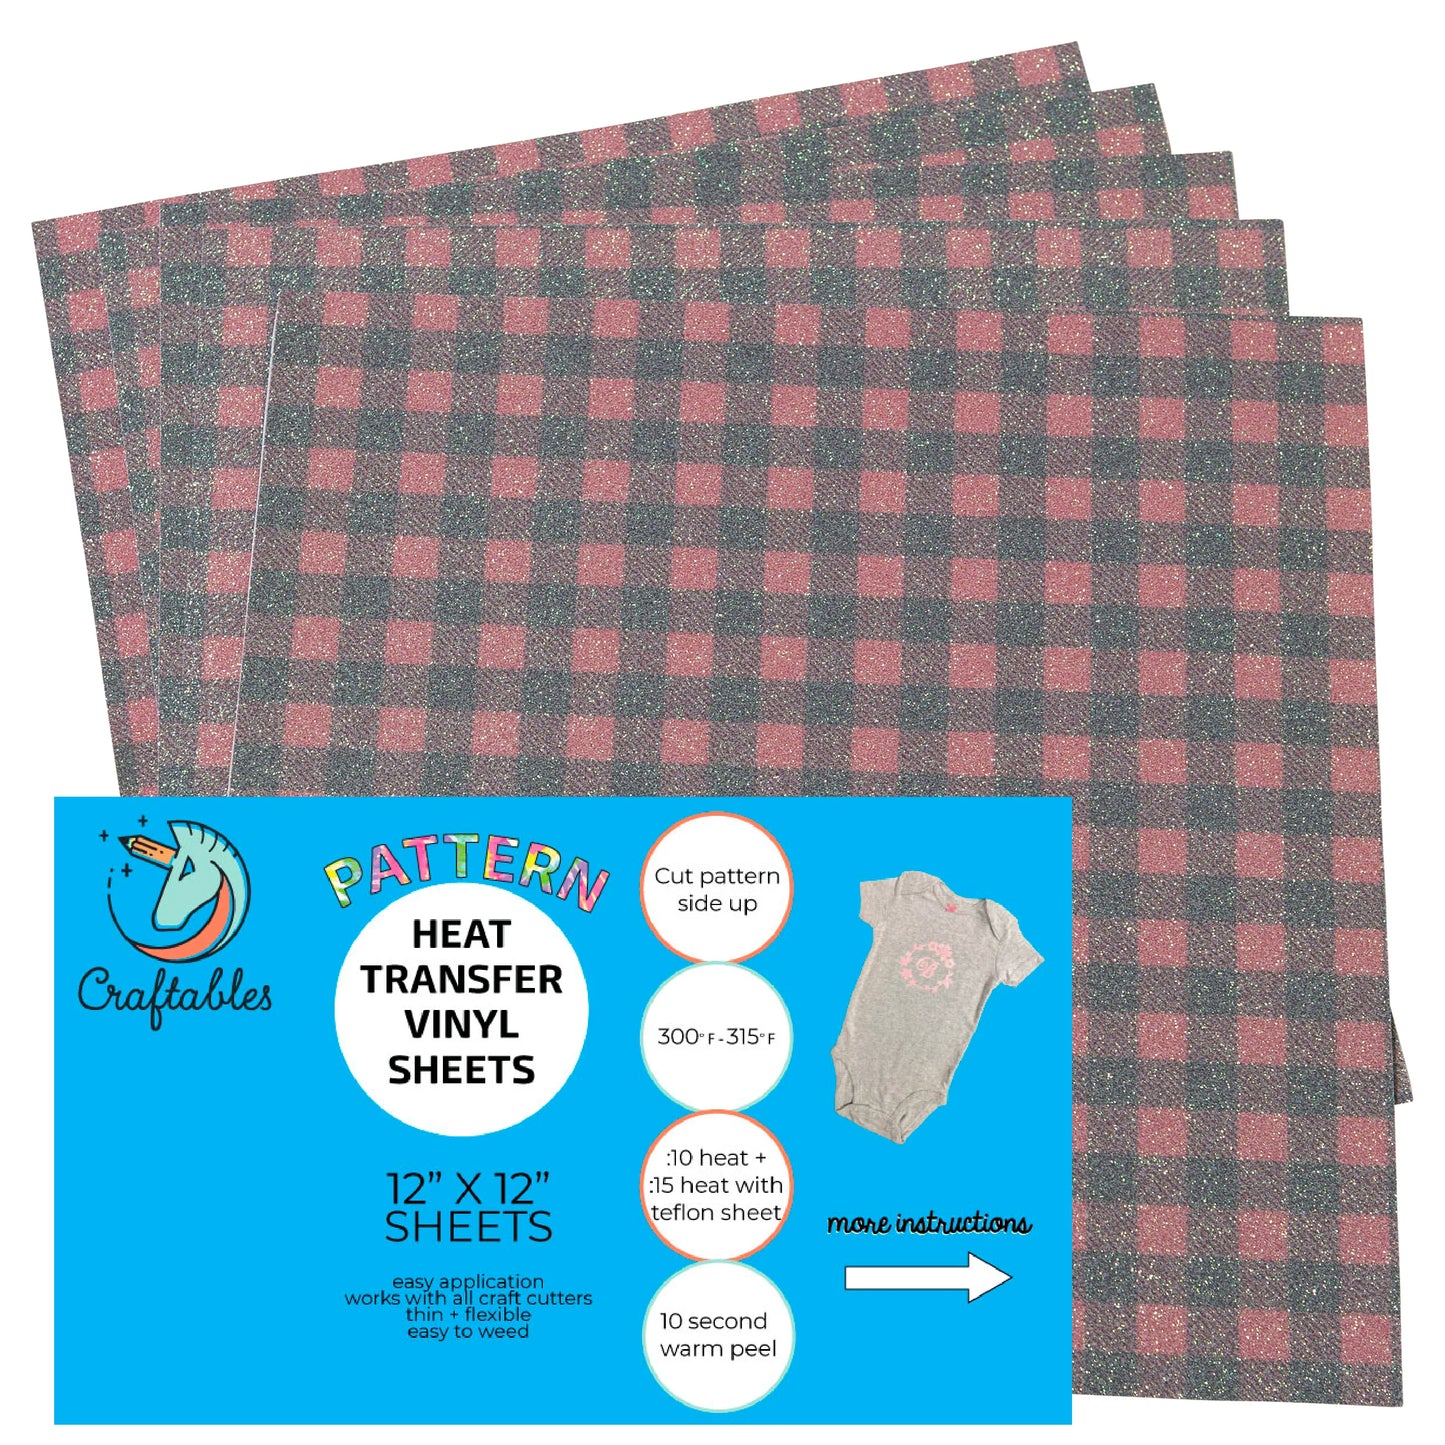 Buffalo Plaid Printed Pattern Heat Transfer Vinyl Sheets By Craftables